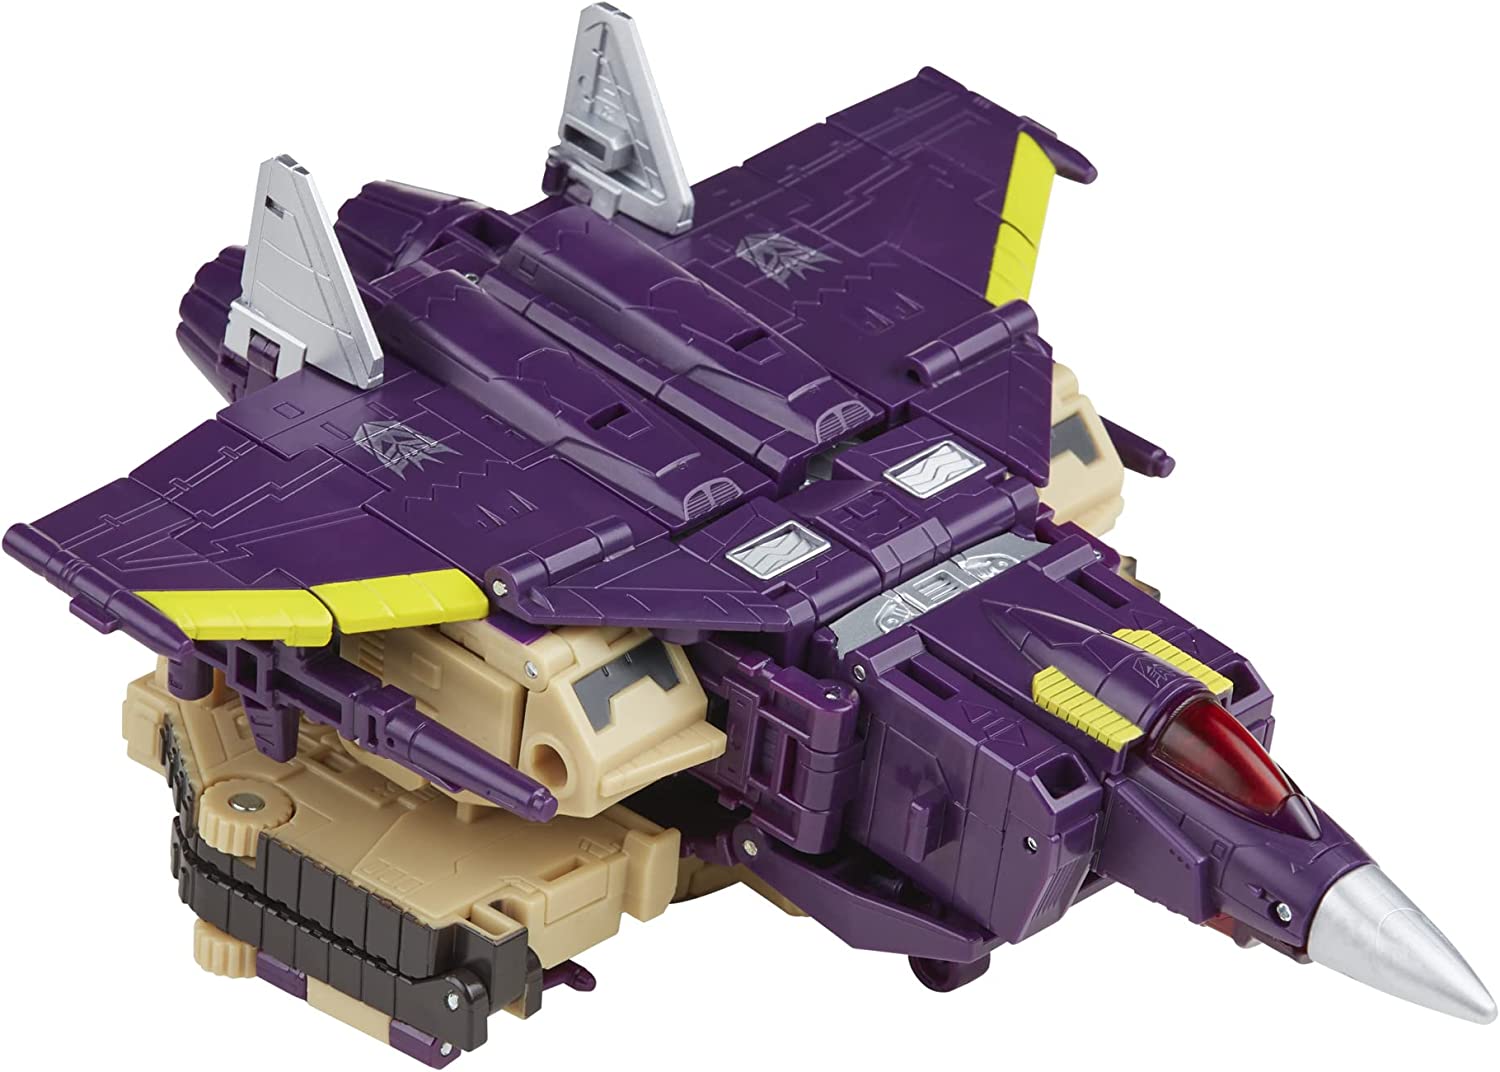 Transformers Generations Legacy Series Leader Blitzwing Triple Changer Figure - toyzverse